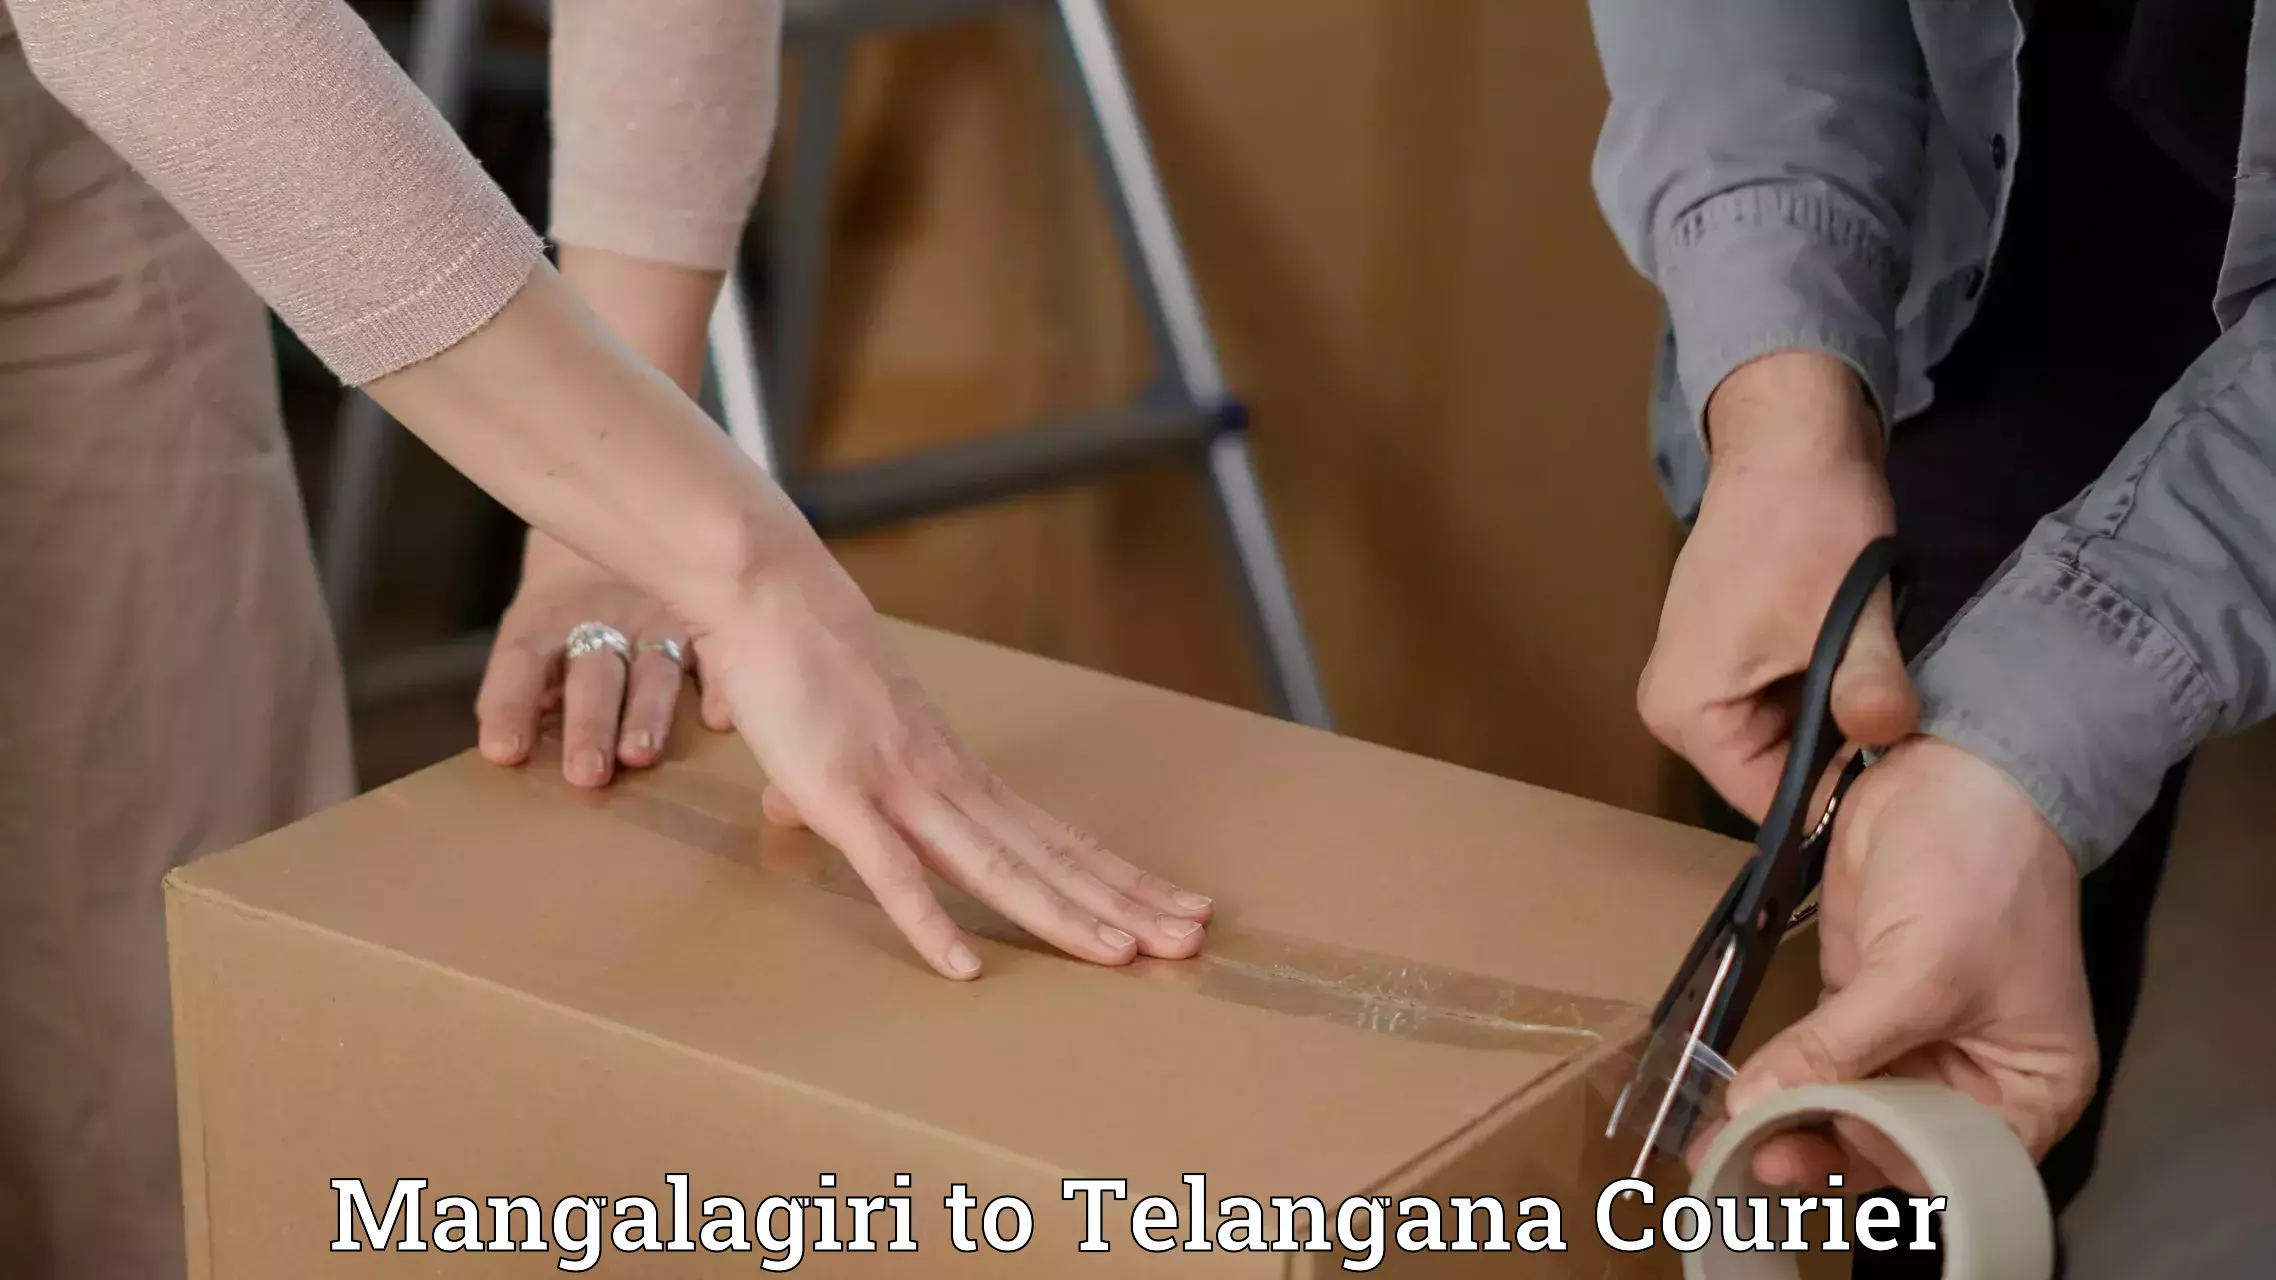 International courier networks Mangalagiri to Telangana